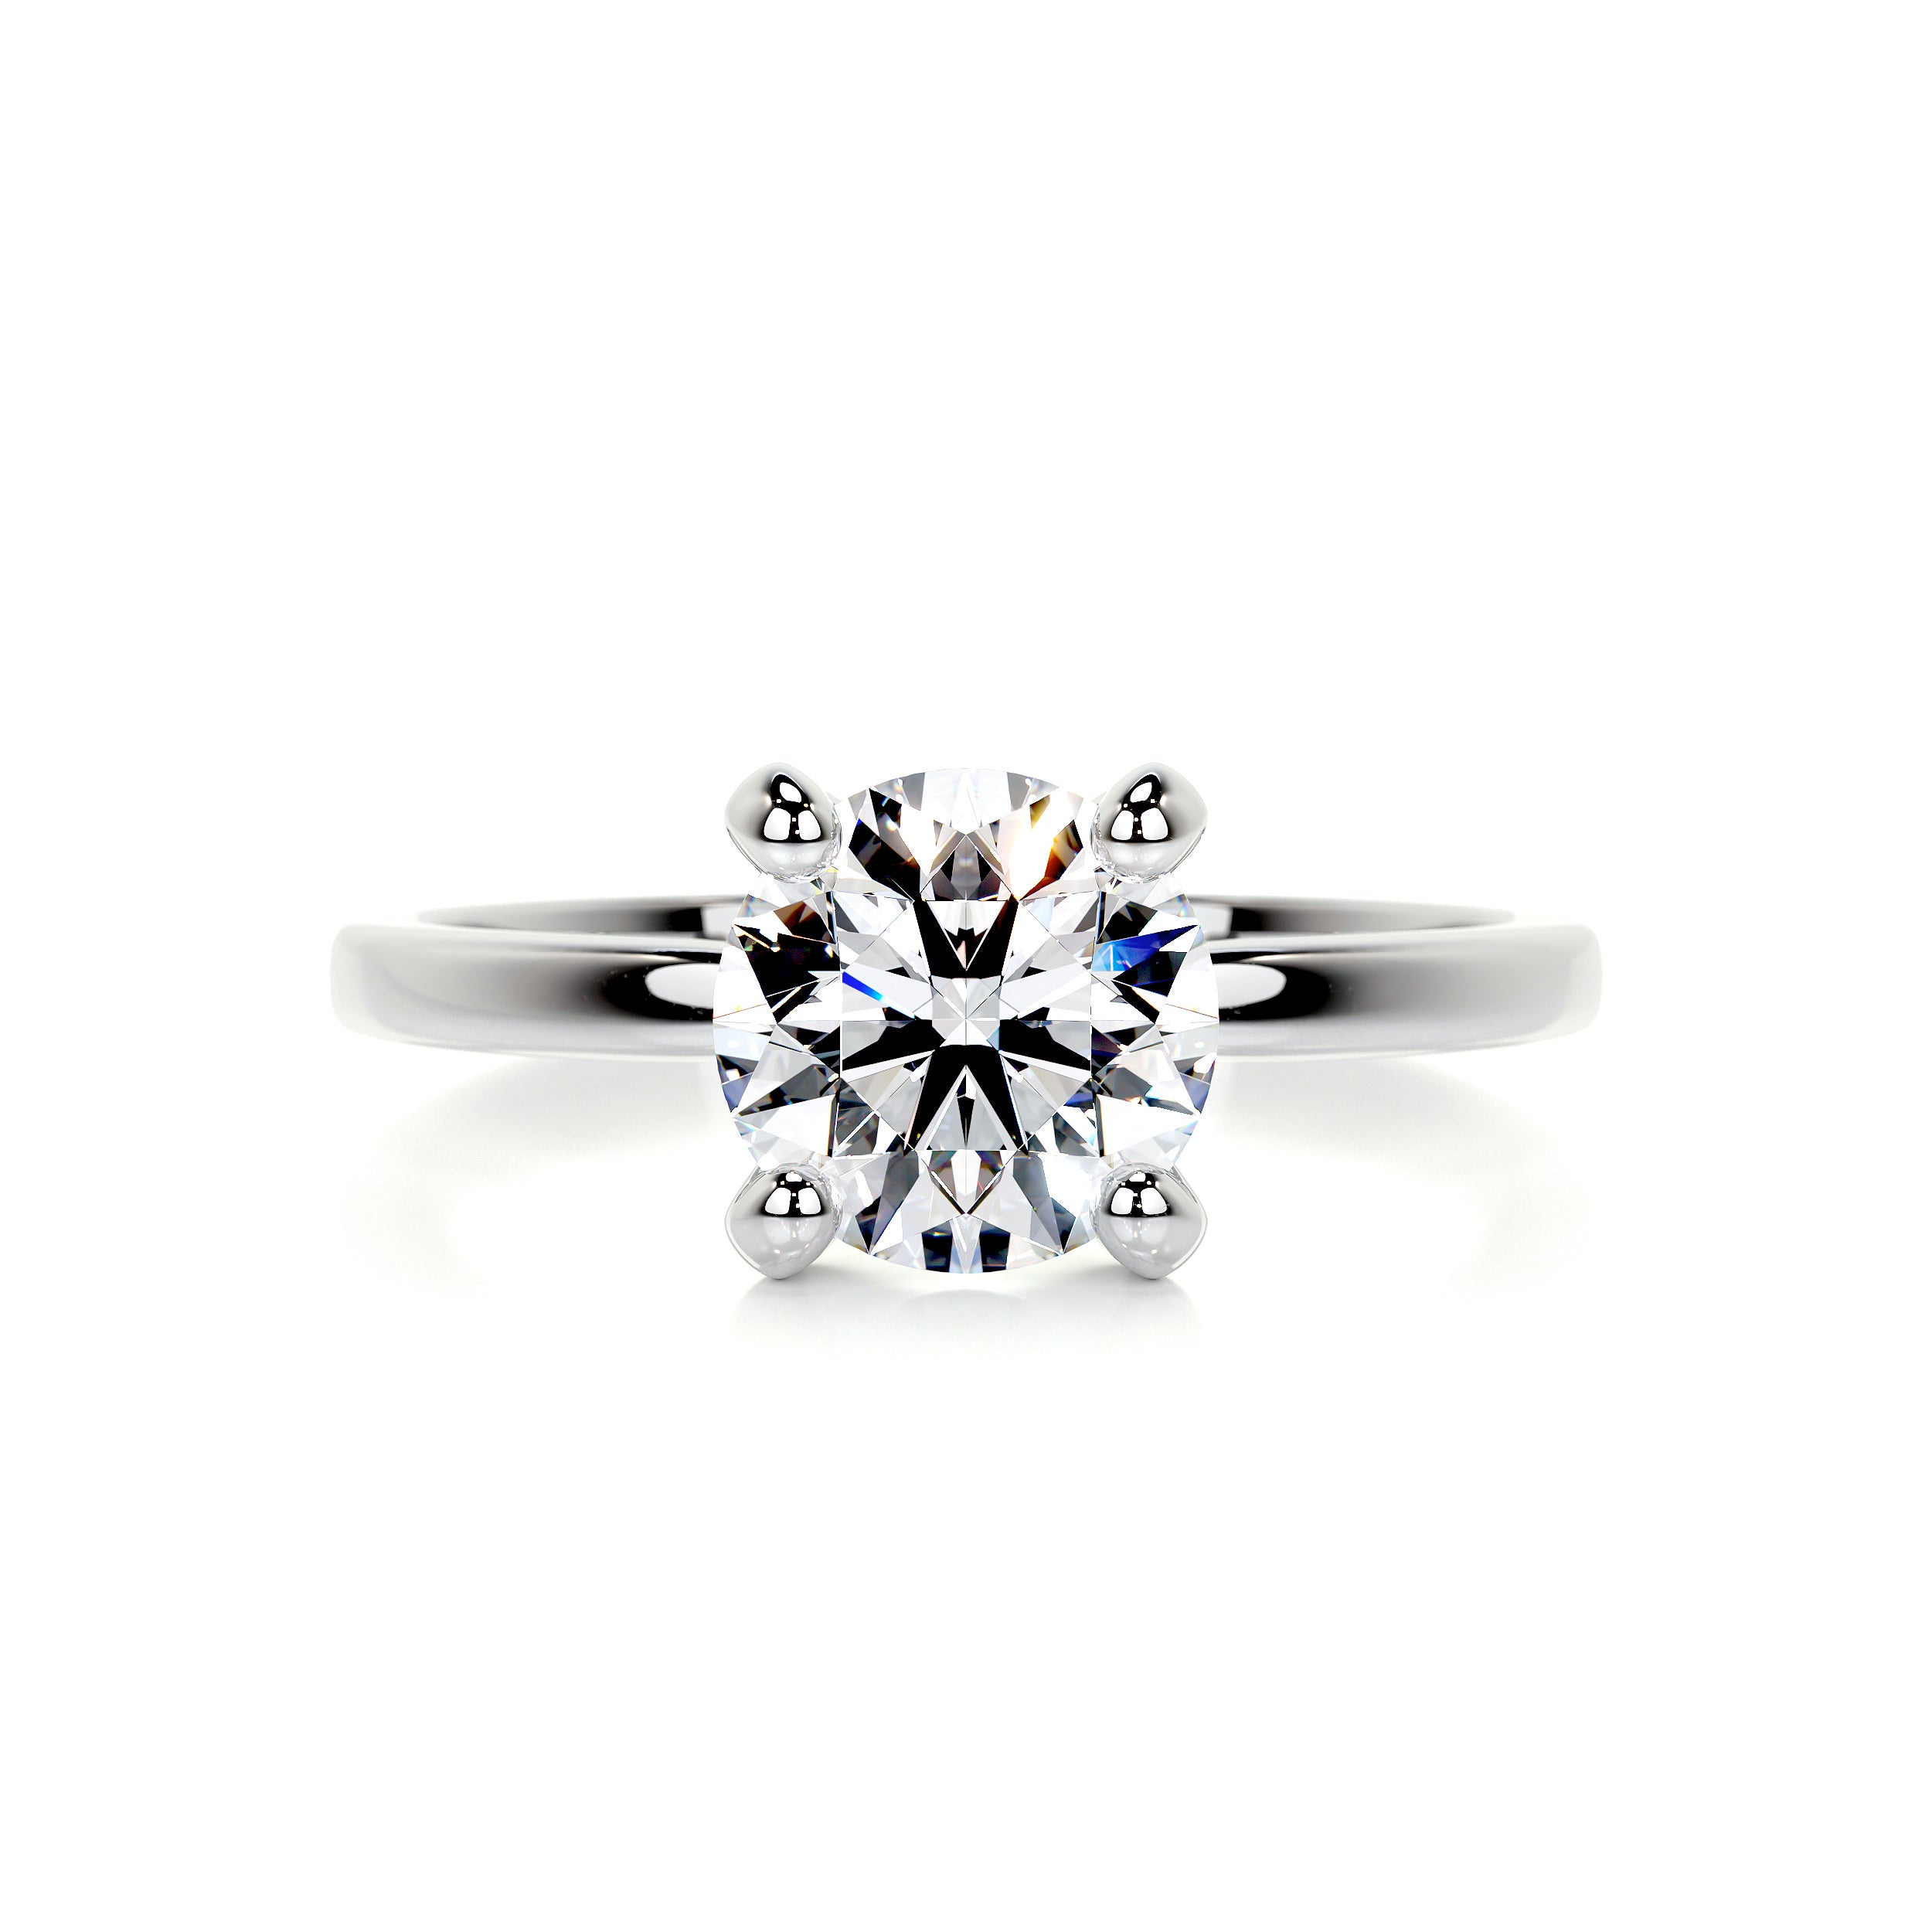 Jessica Diamond Engagement Ring   (1.5 Carat) -14K White Gold